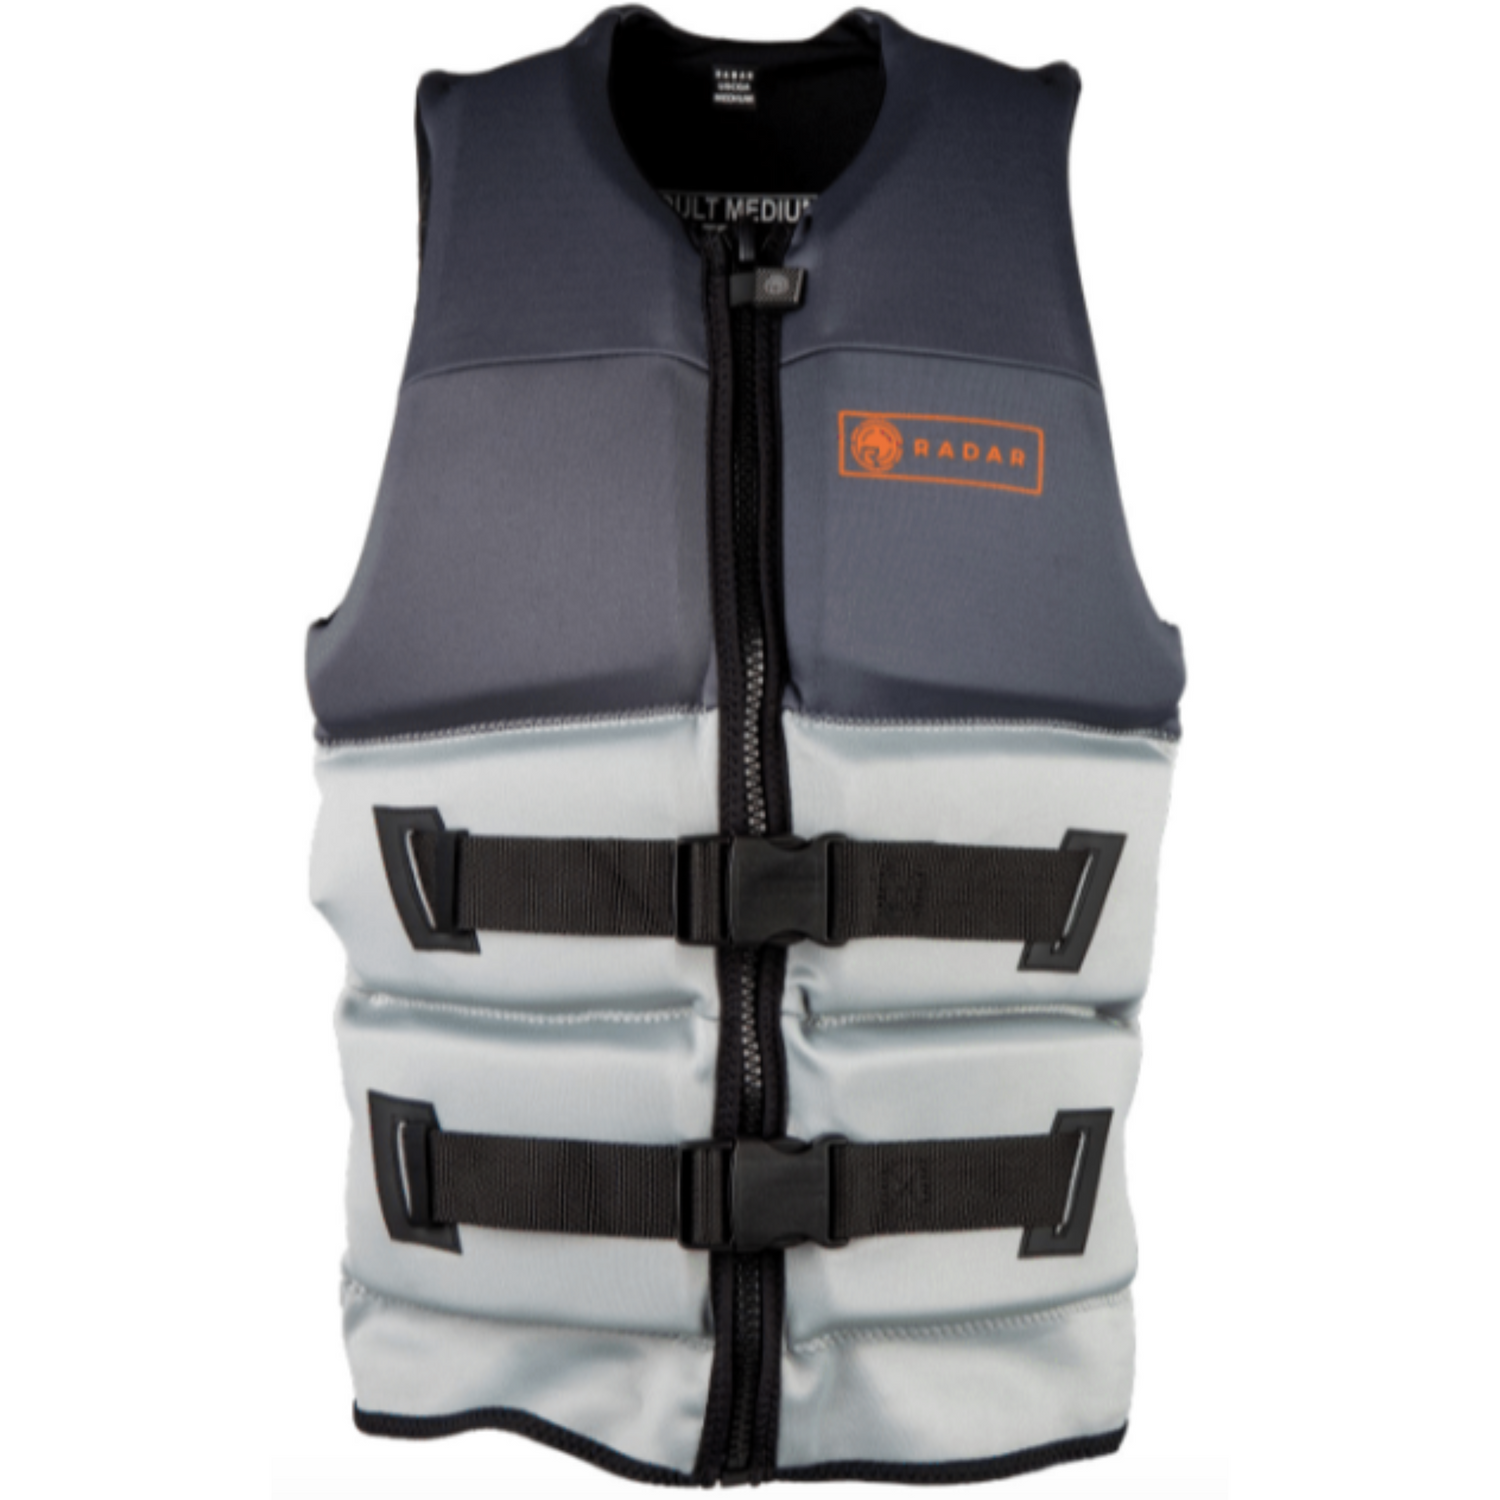 Radar Men's Surface CGA vest in two-tone grey